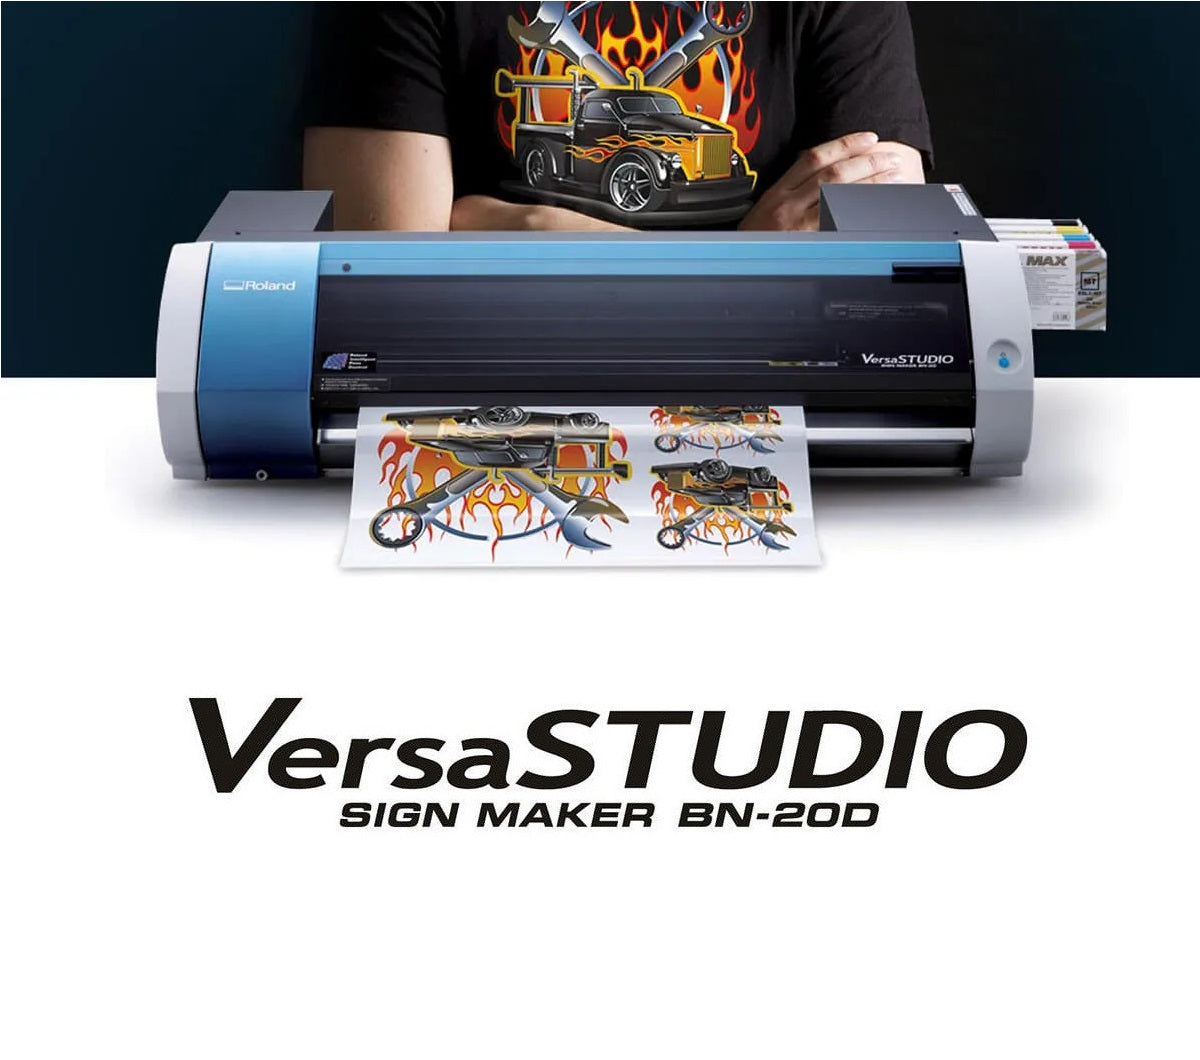 Roland DG Announces Affordable, Easy-to-use VersaSTUDIO BN-20D Desktop Direct-To-Film Printer